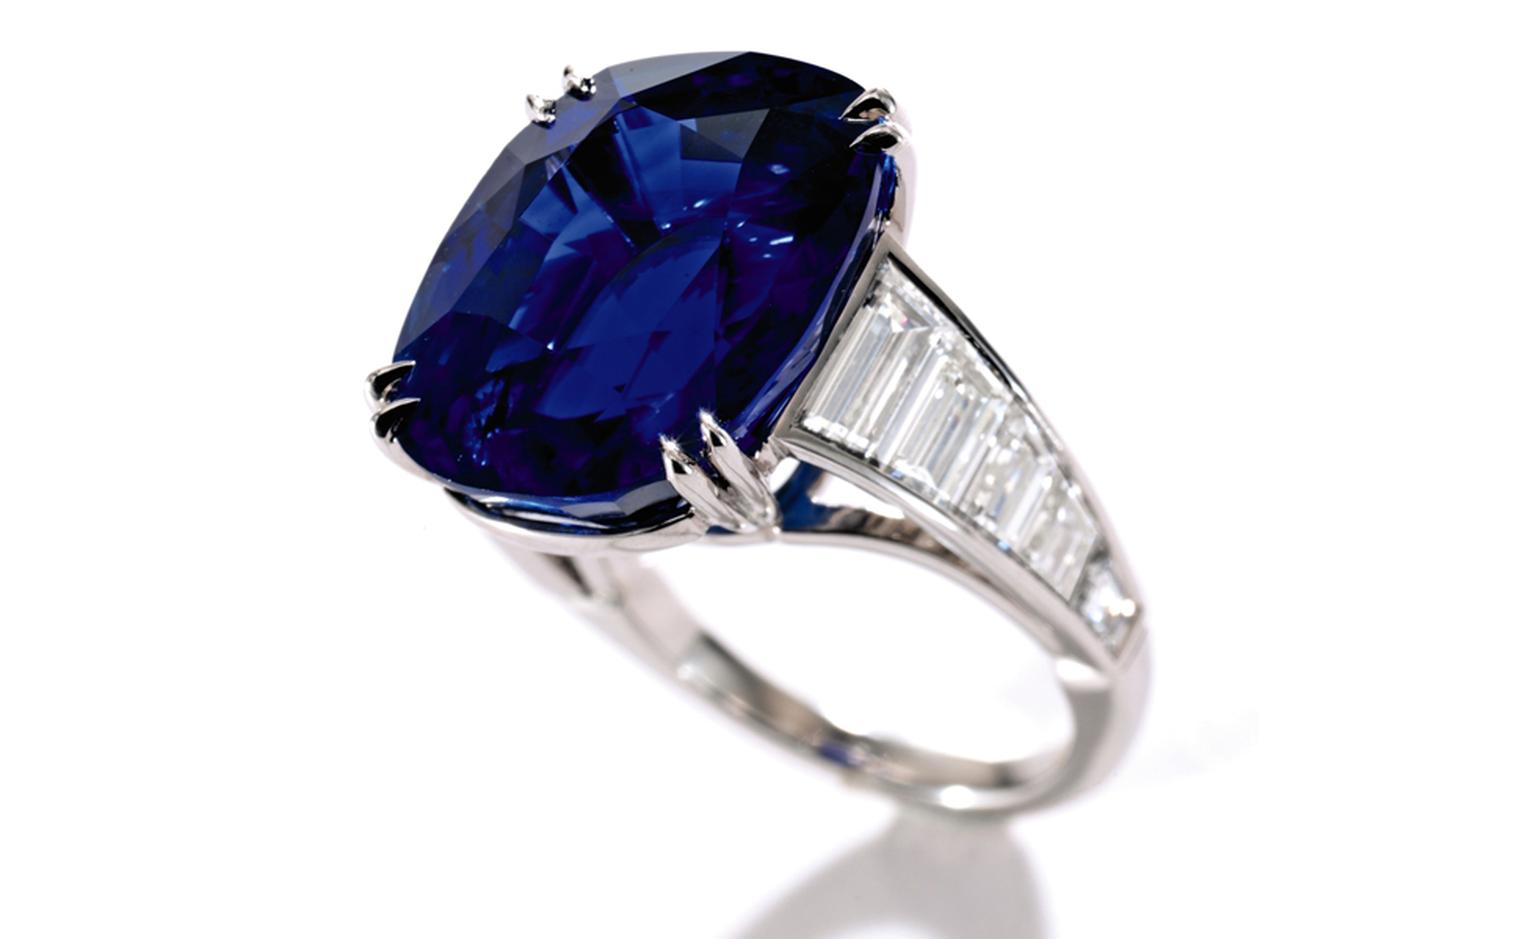 Lot 343, Platinum, Sapphire and Diamond Ring Est. $700,000/1 million.  SOLD FOR $794,500